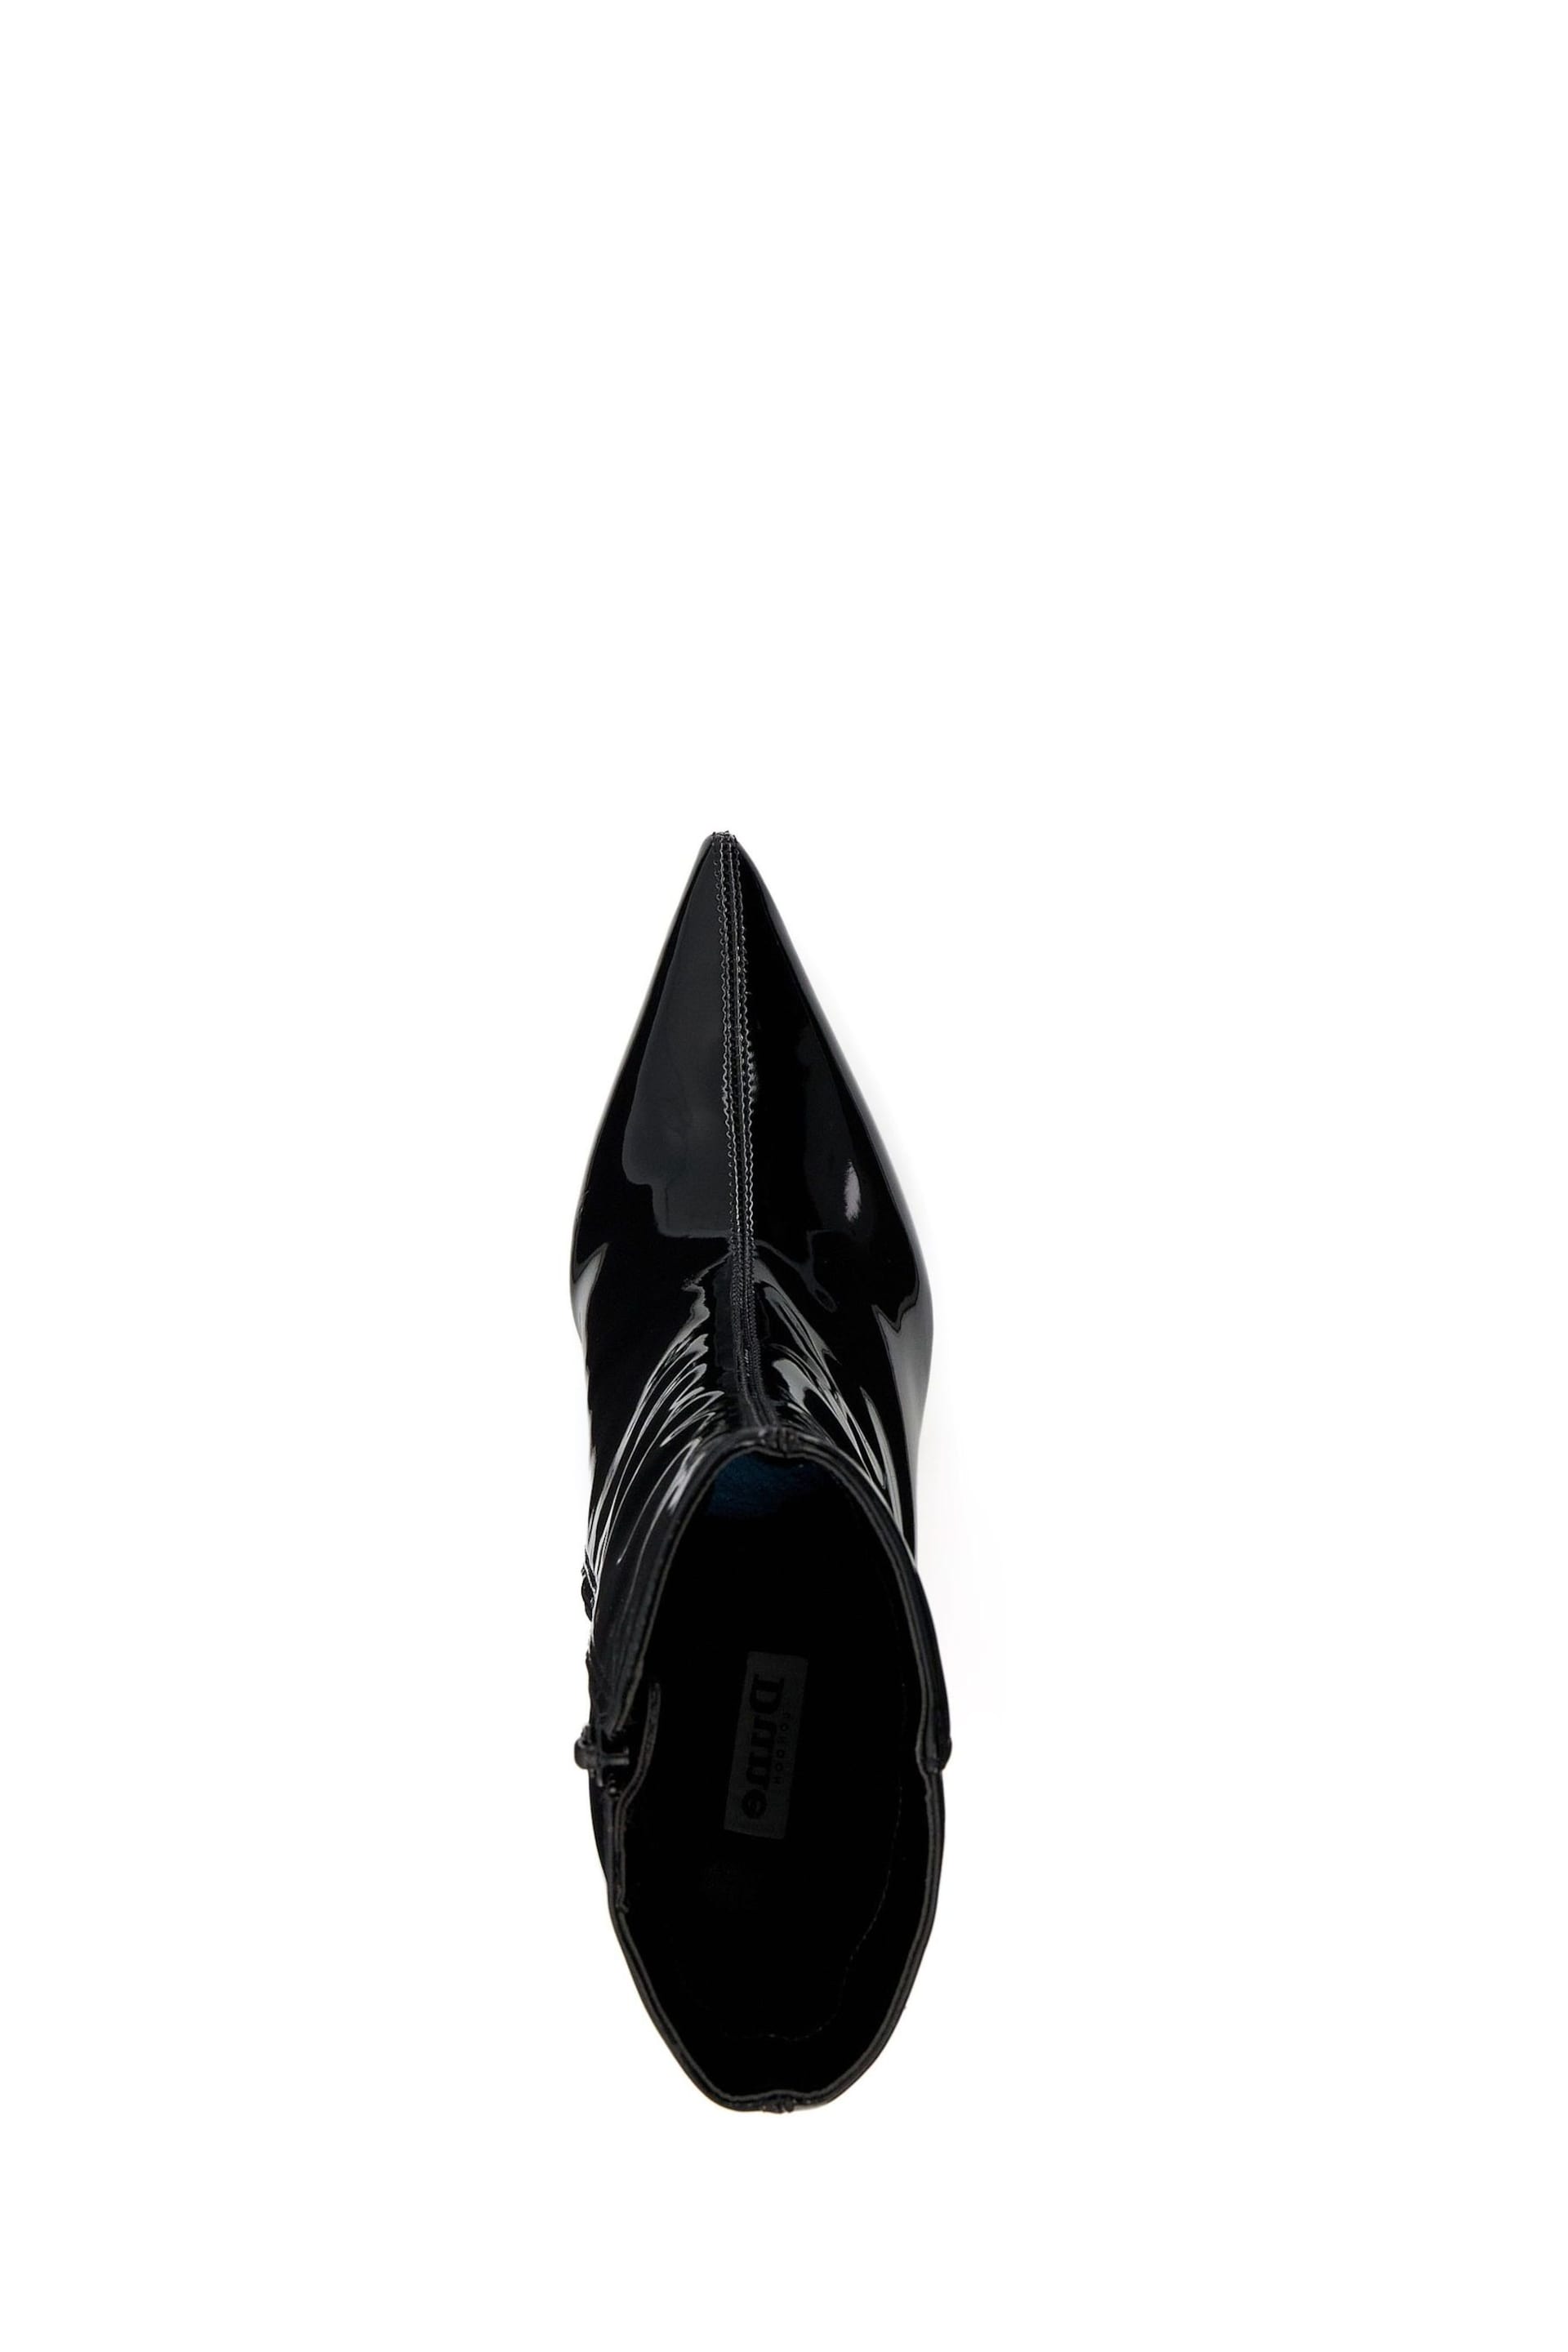 Dune London Black Point Olexi Stiletto Boots - Image 5 of 6